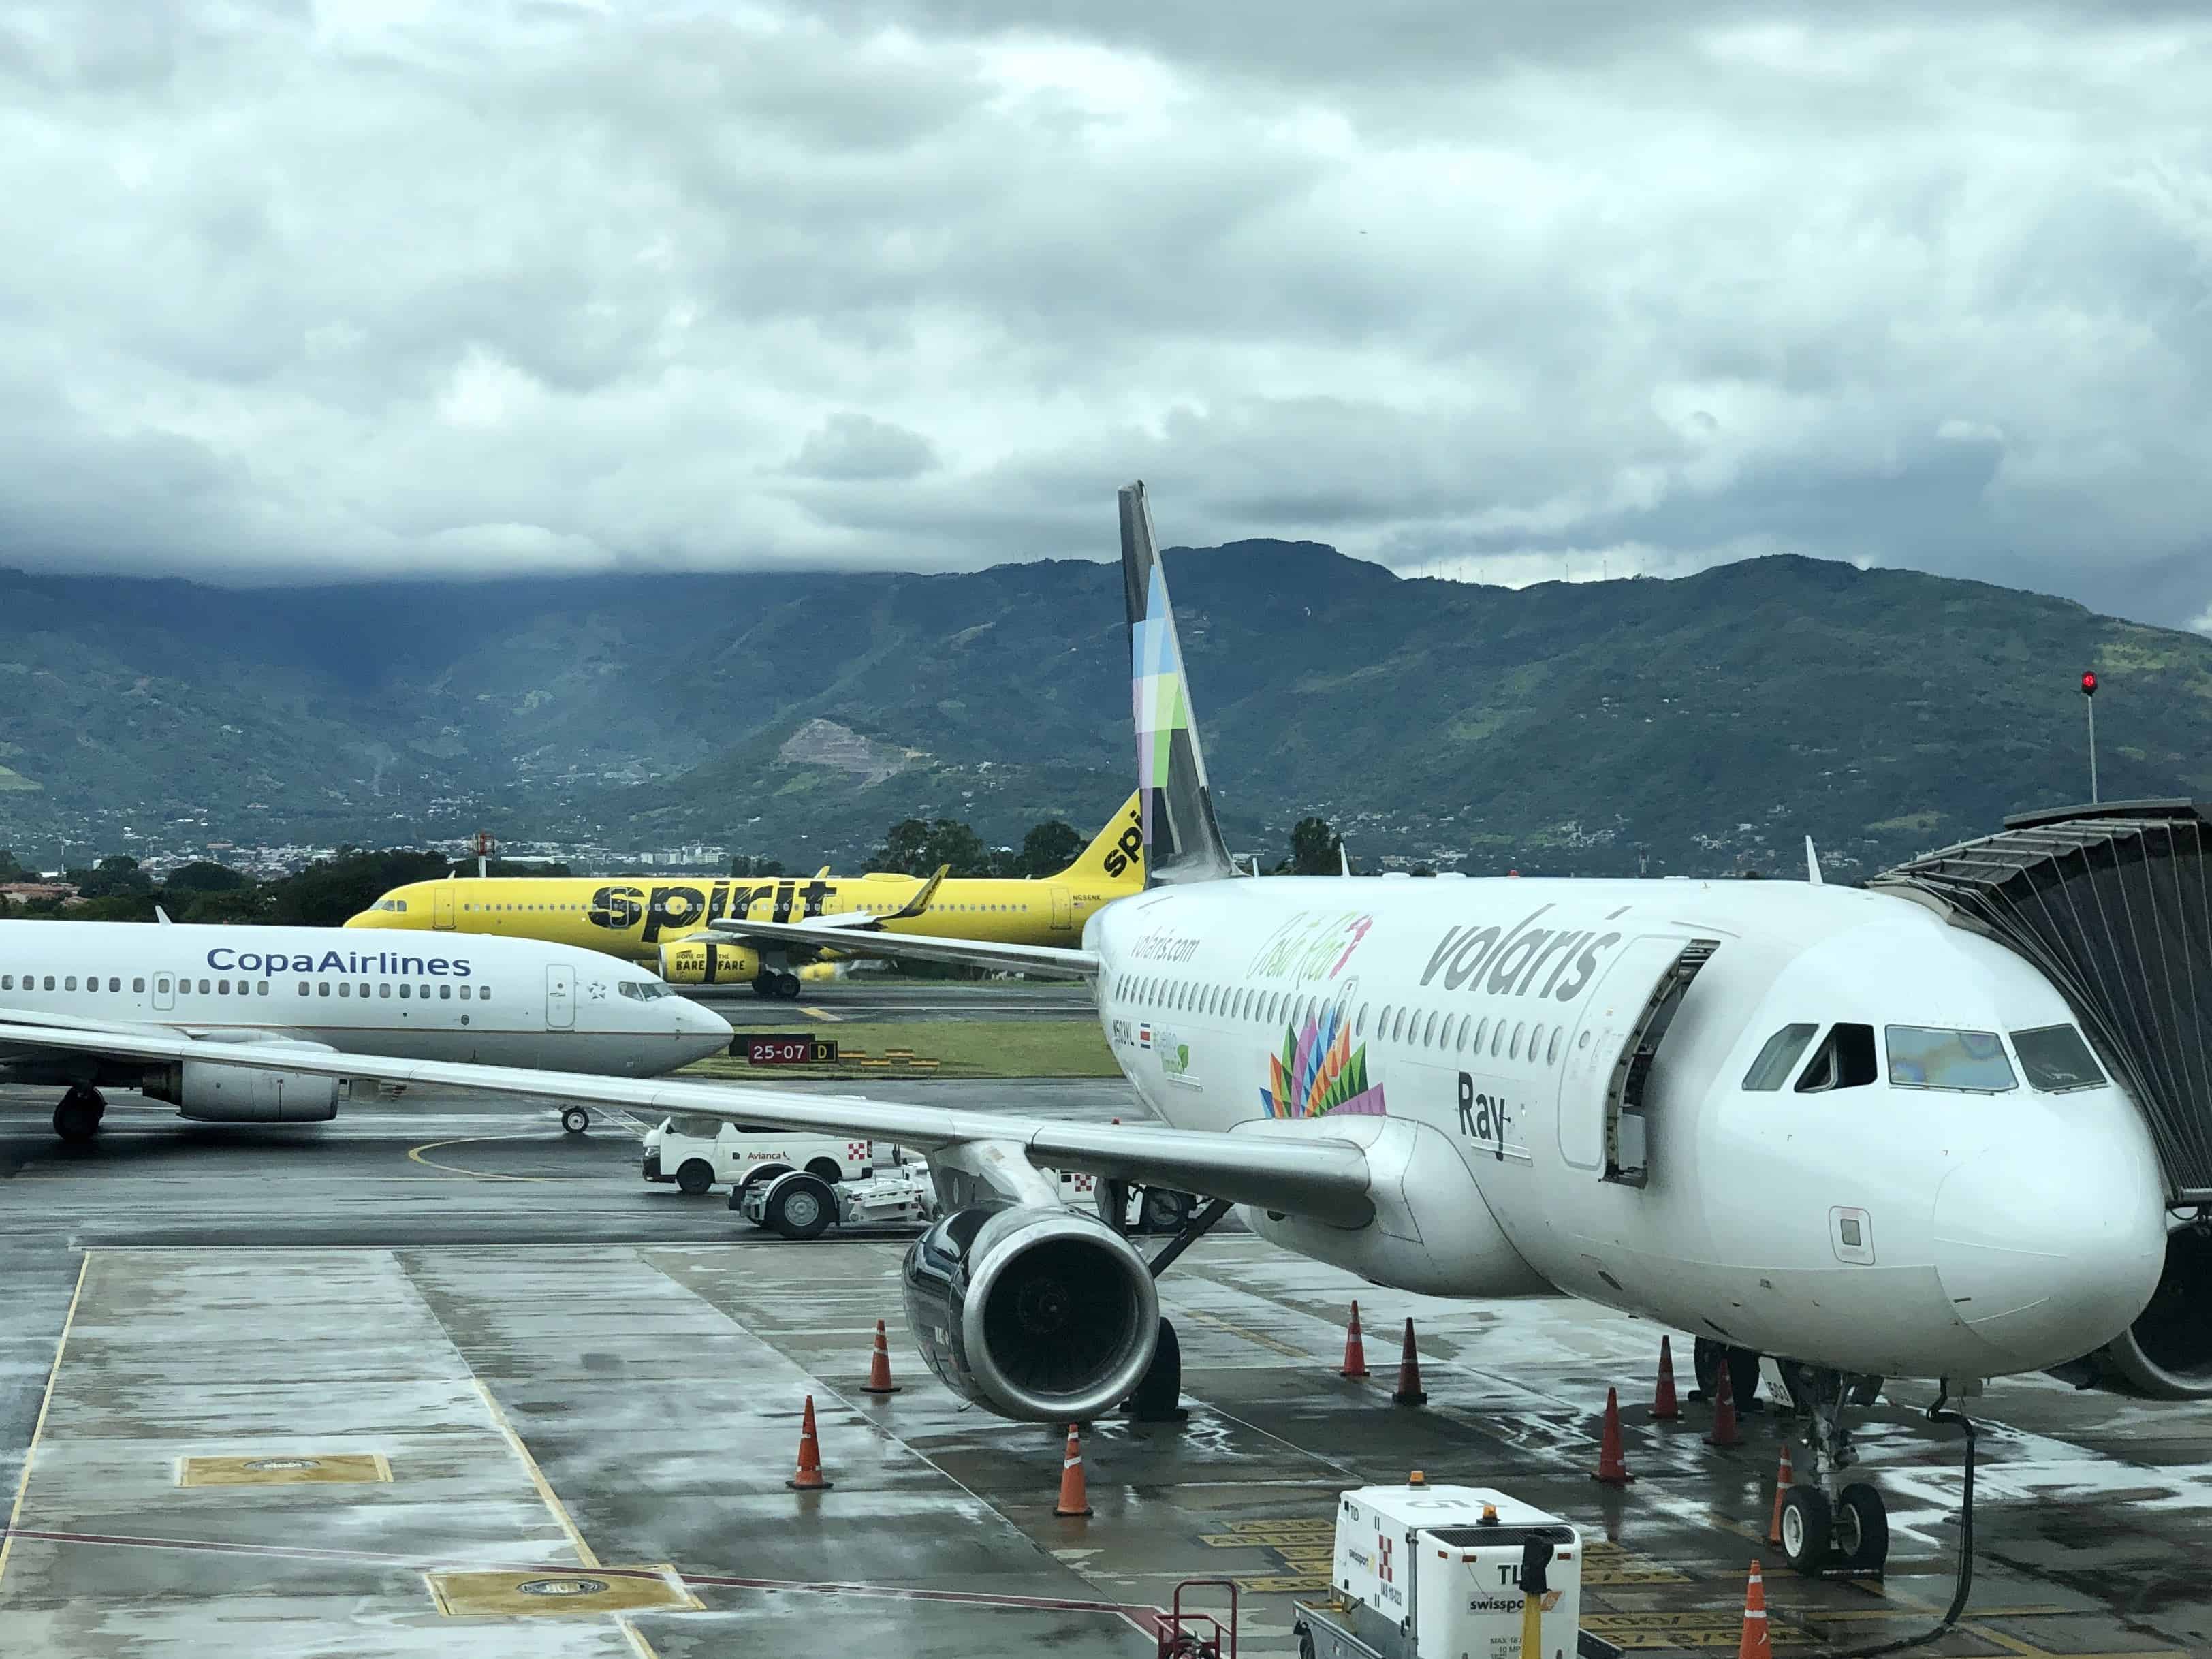 Planes at SJO in Costa Rica